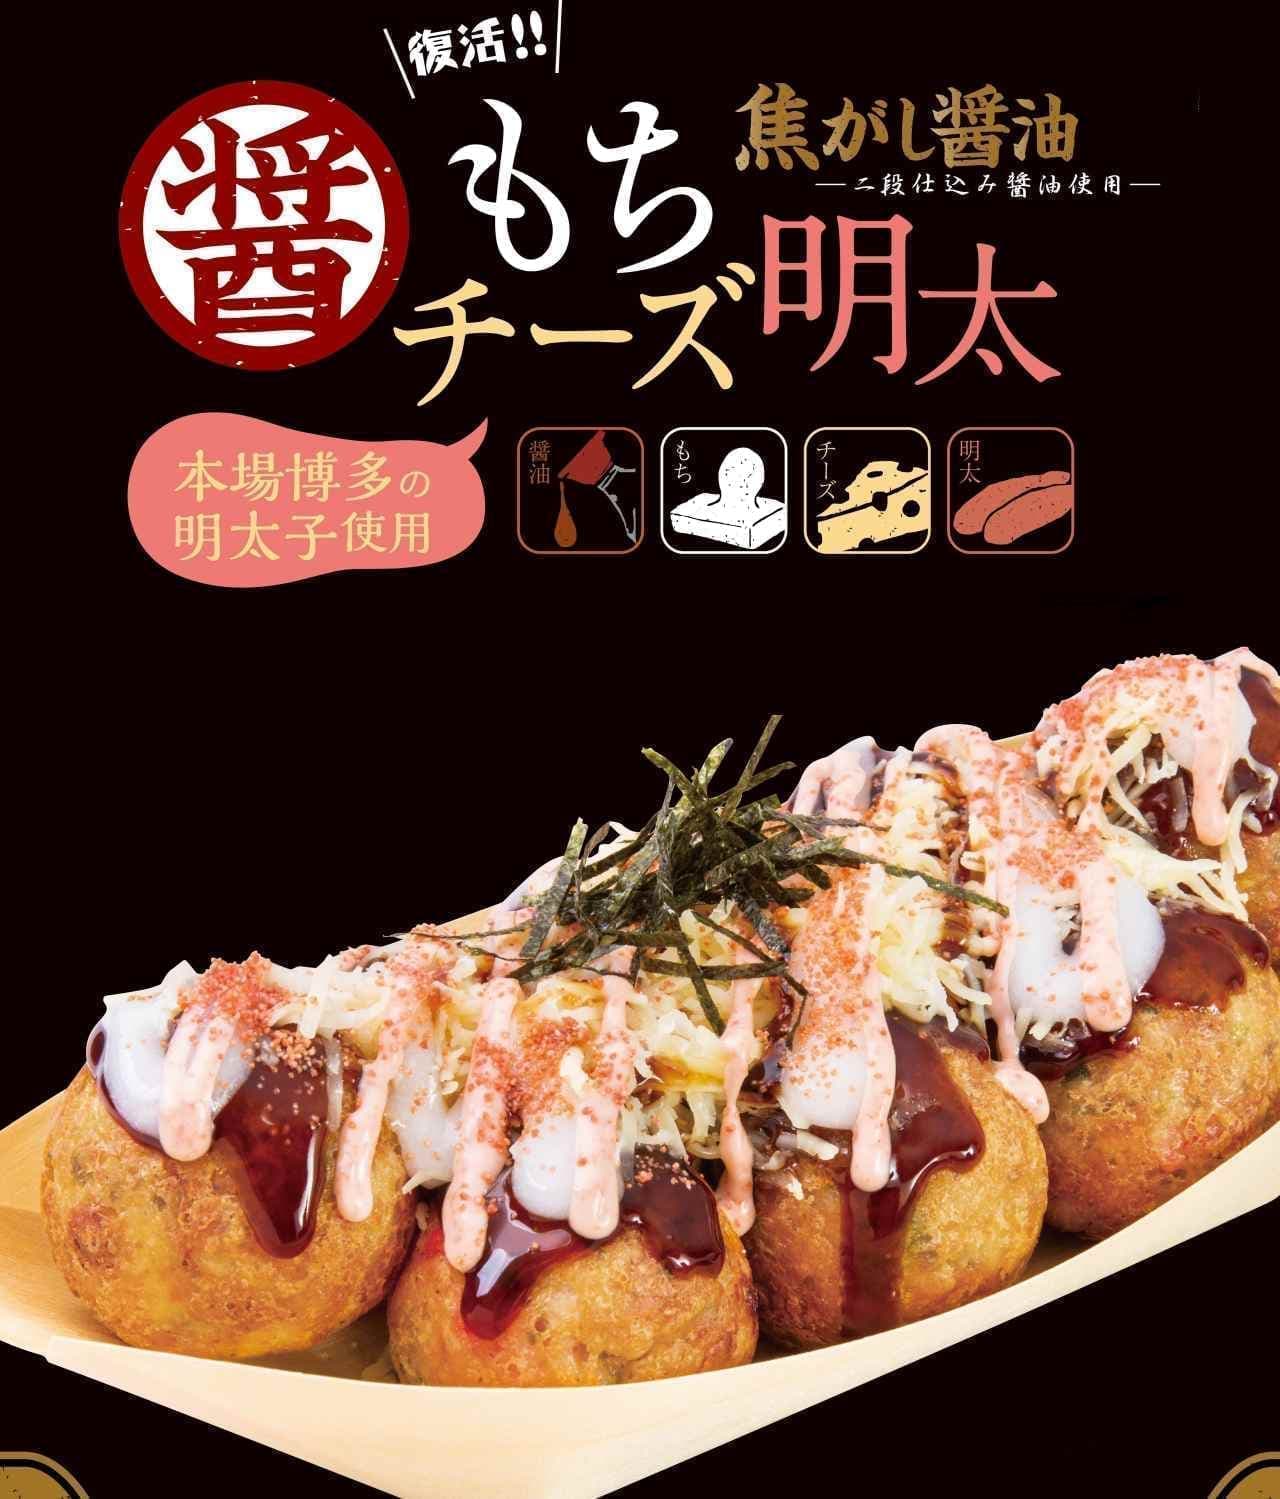 Tsukiji Gindaco "Scorched Soy Sauce Mochi Cheese Meita"